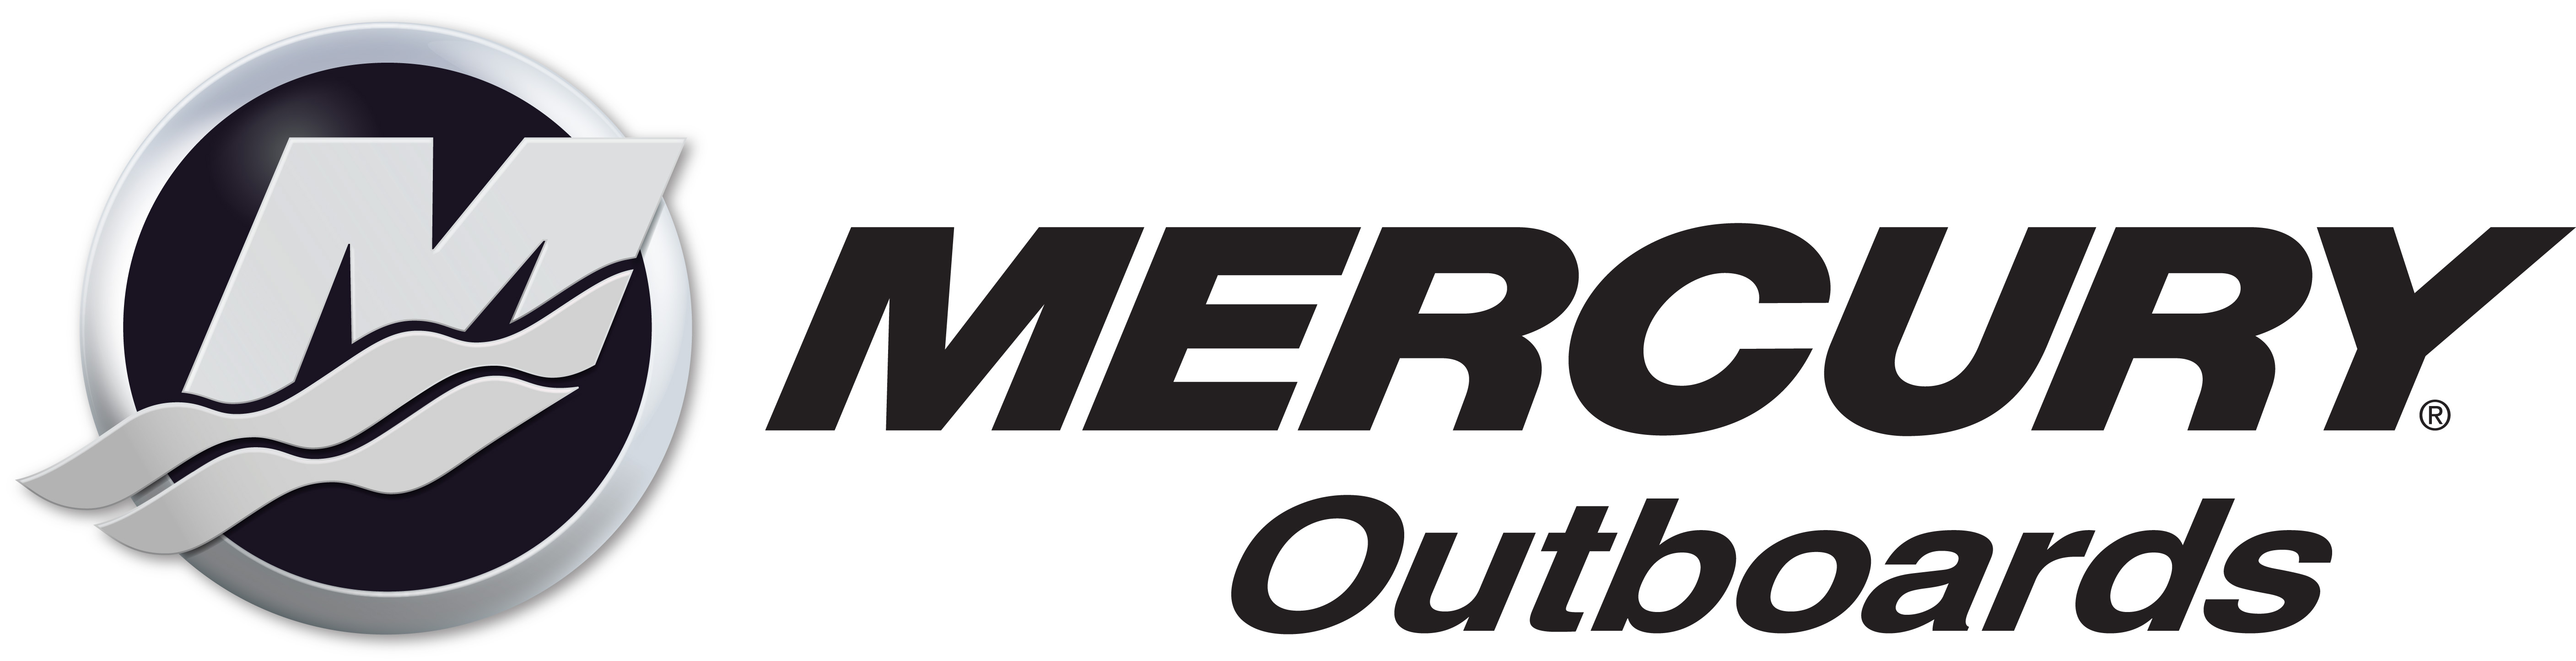 Mercury Outboards Lockup